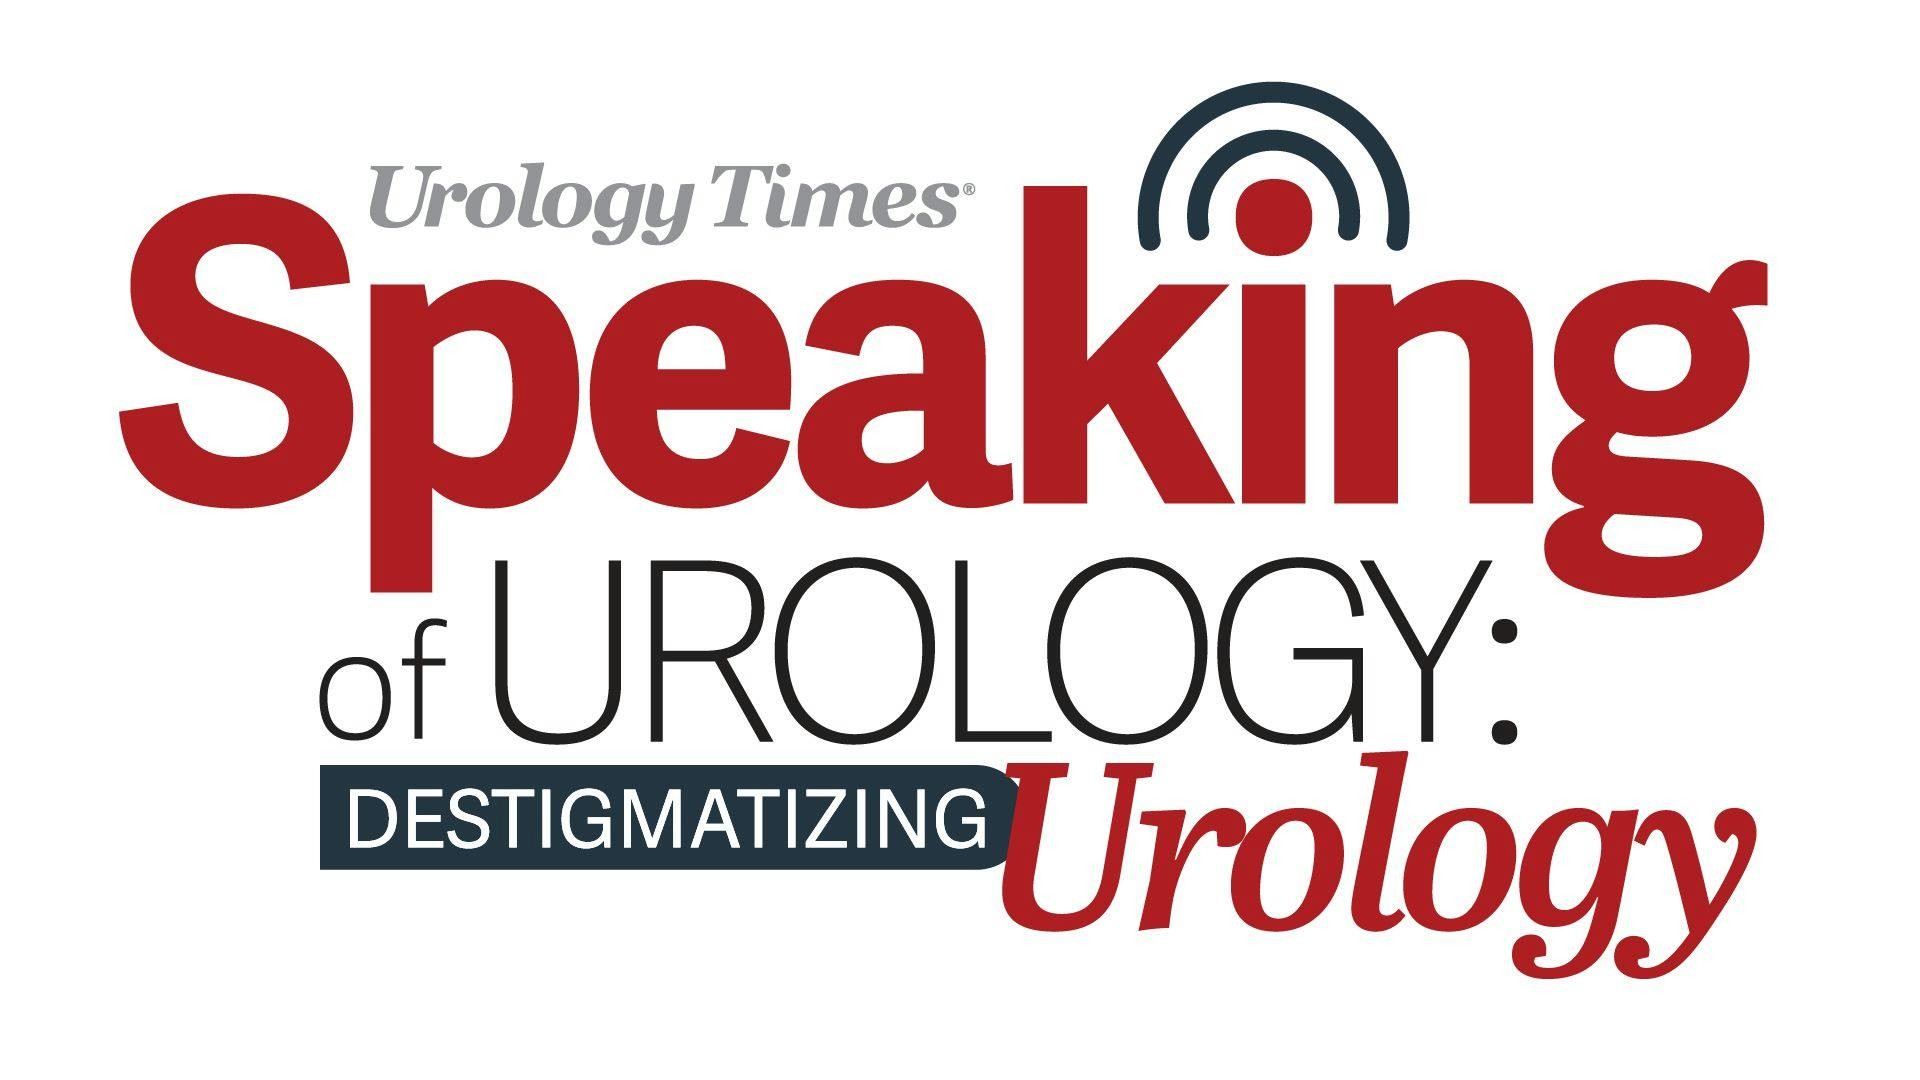 Destigmatizing Urology: Dr. Leibovich discusses testicular cancer